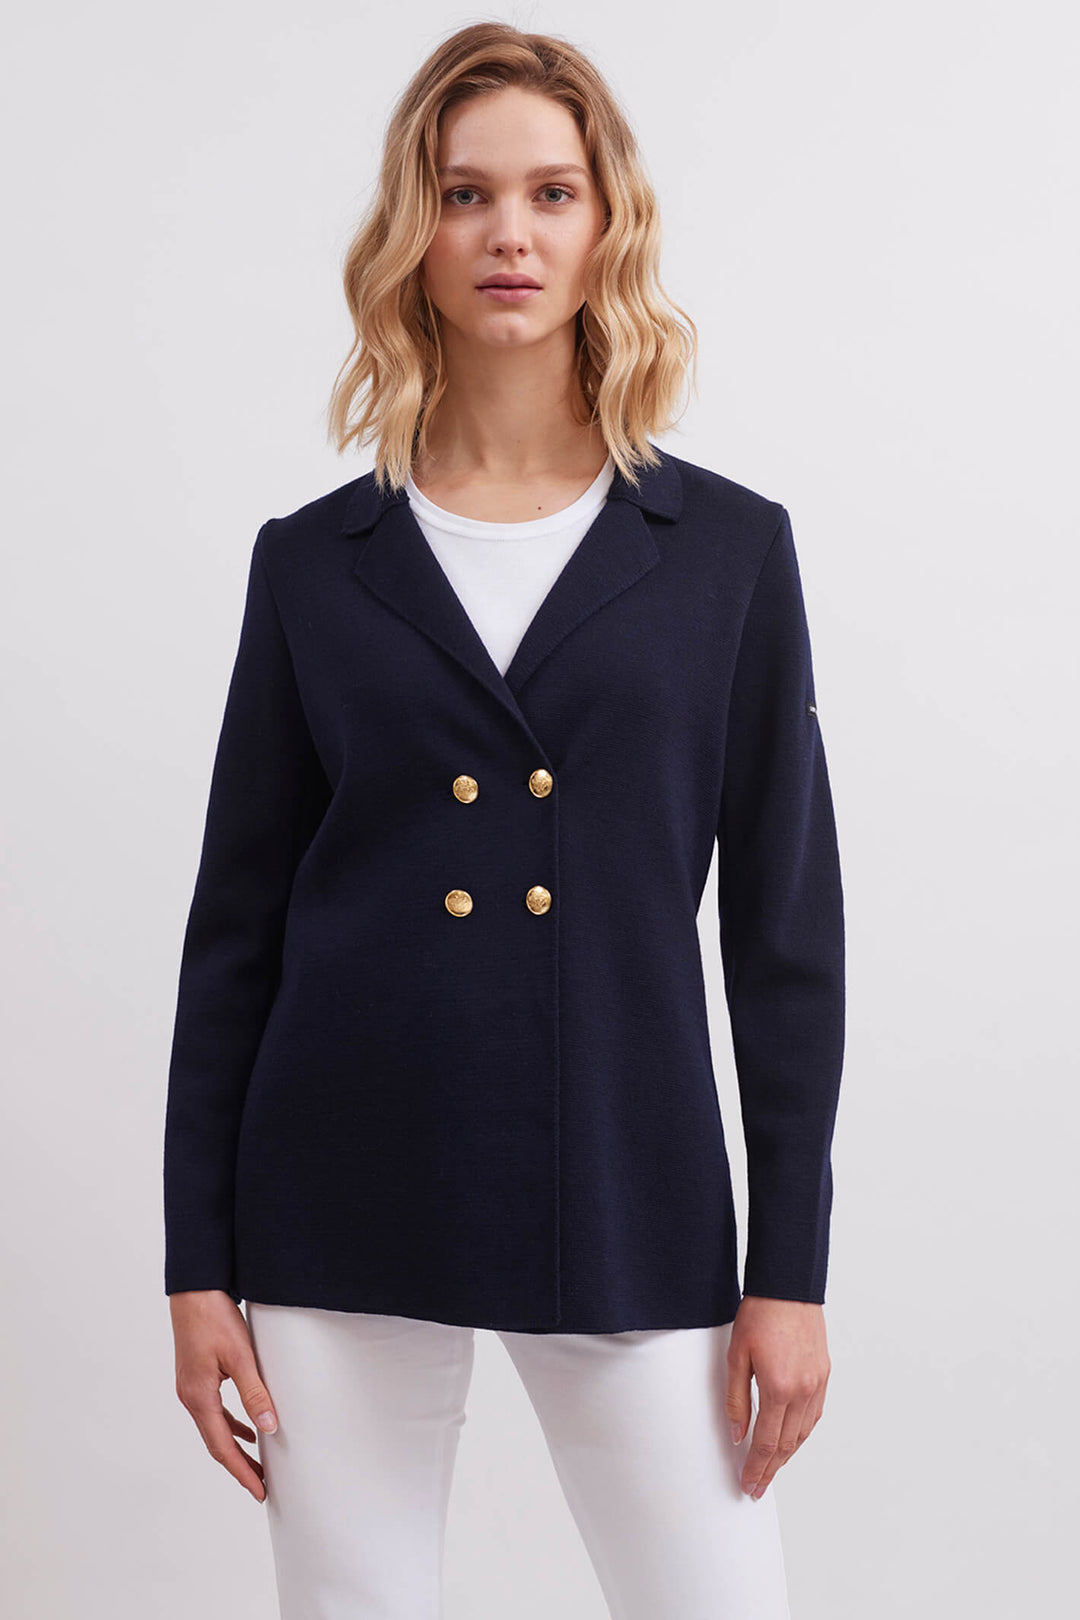 Saint James Charente 0314-CC Navy Double Breasted Blazer Jacket - Olivia Grace Fashion